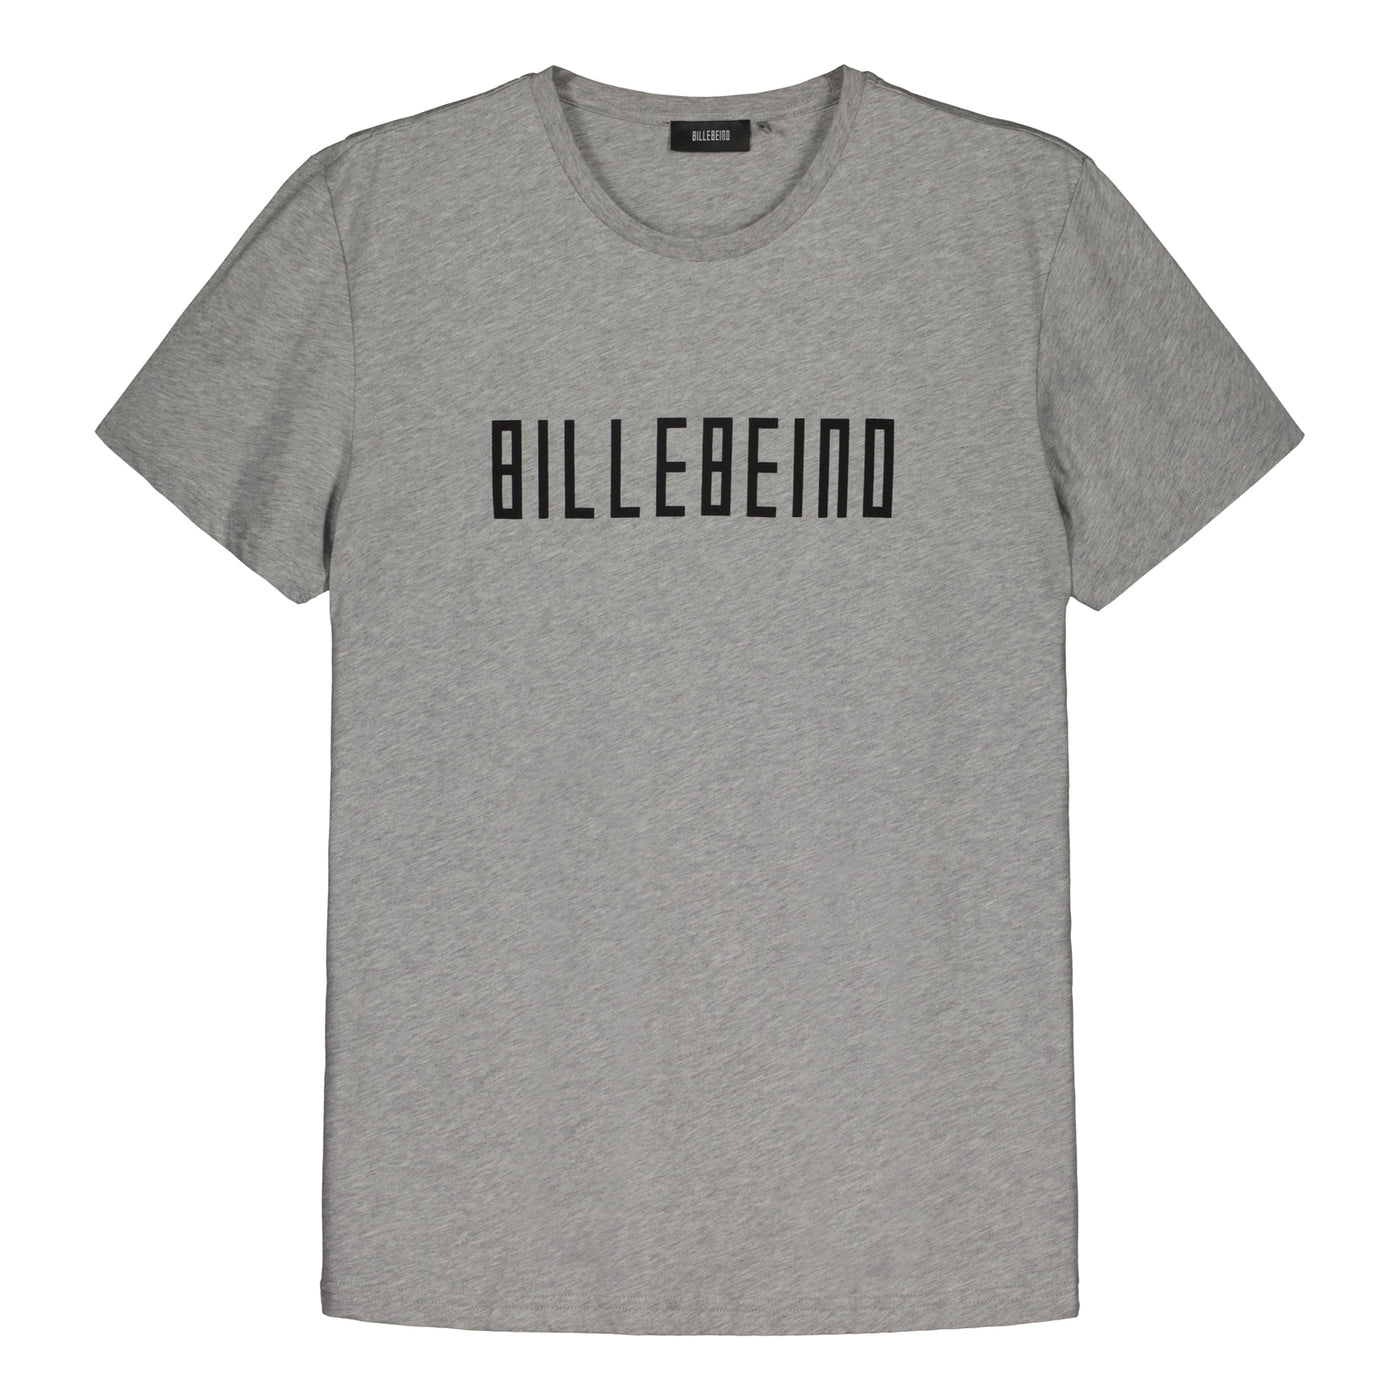 BILLEBEINO T-SHIRT 